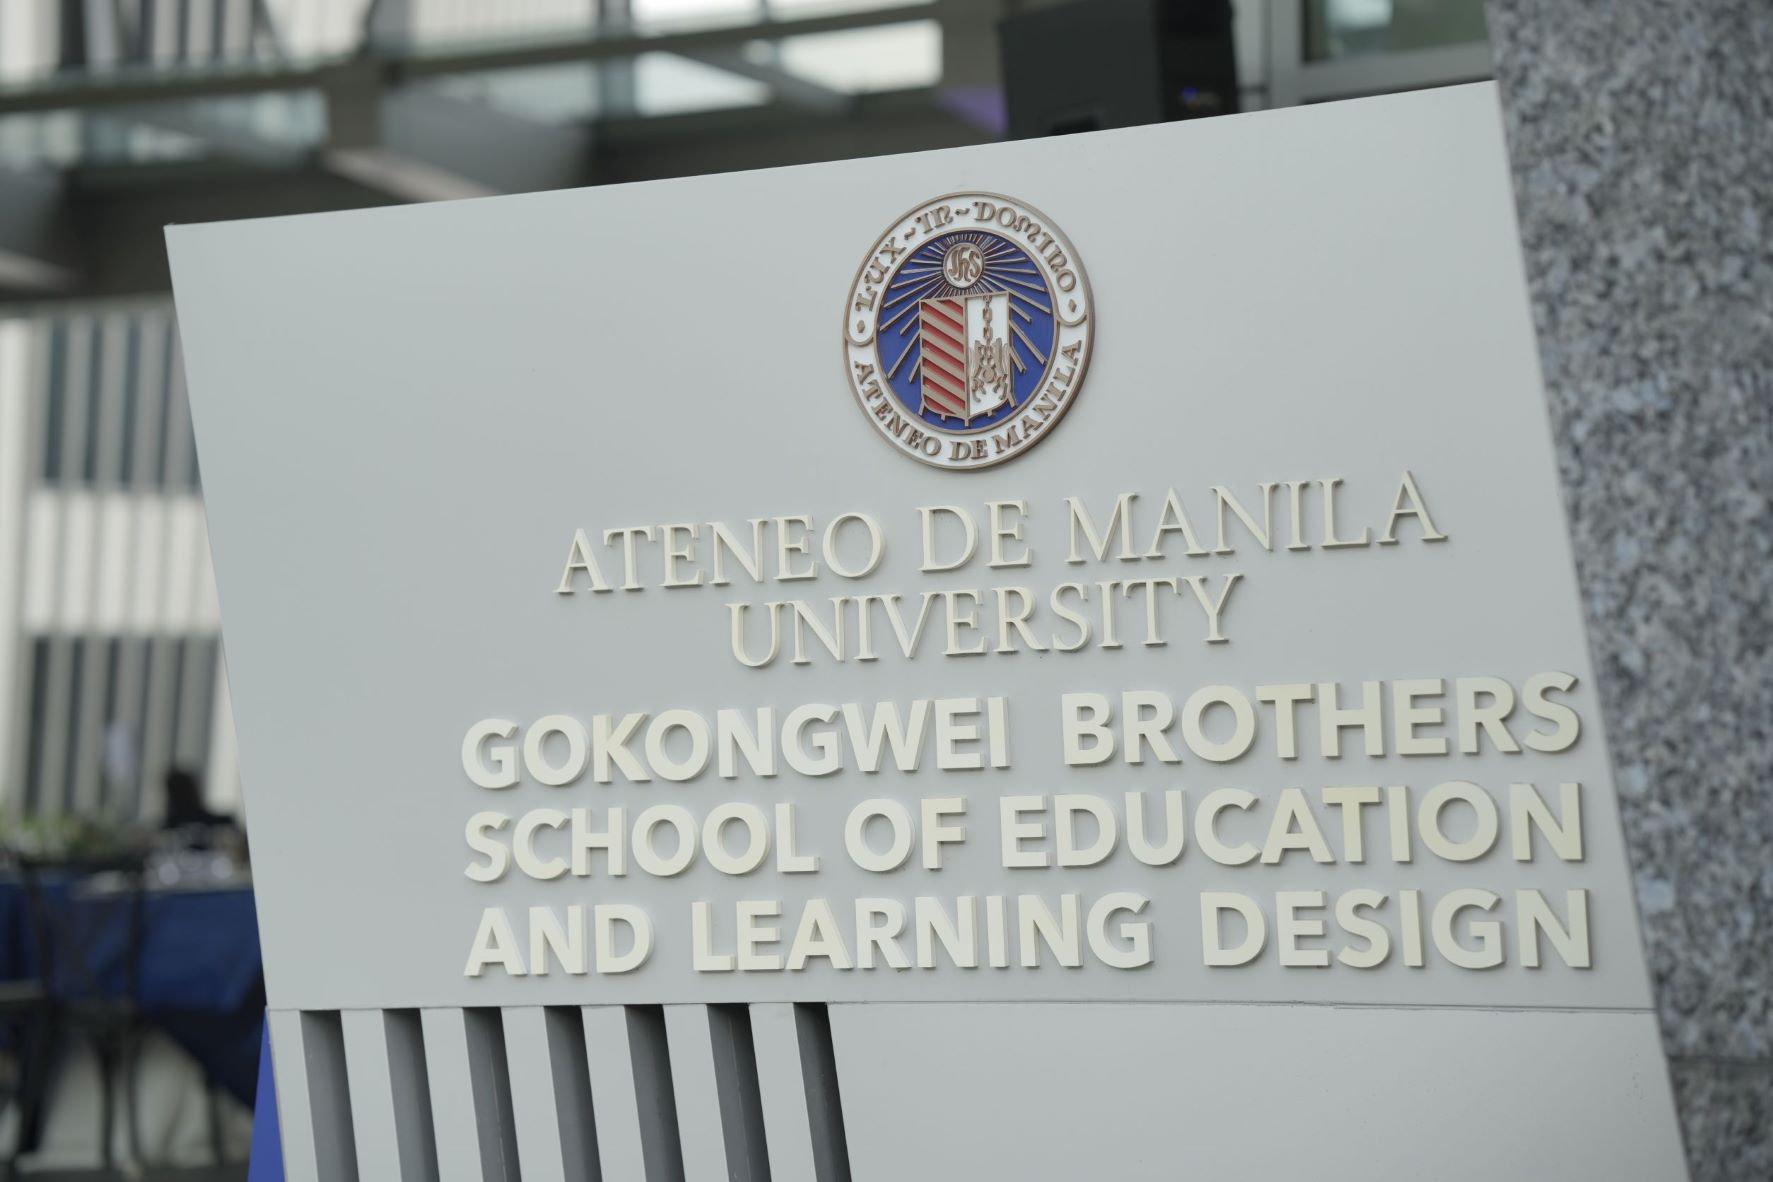 Ateneo de Manila University Gokongwei Brothers School of Education and Learning Design